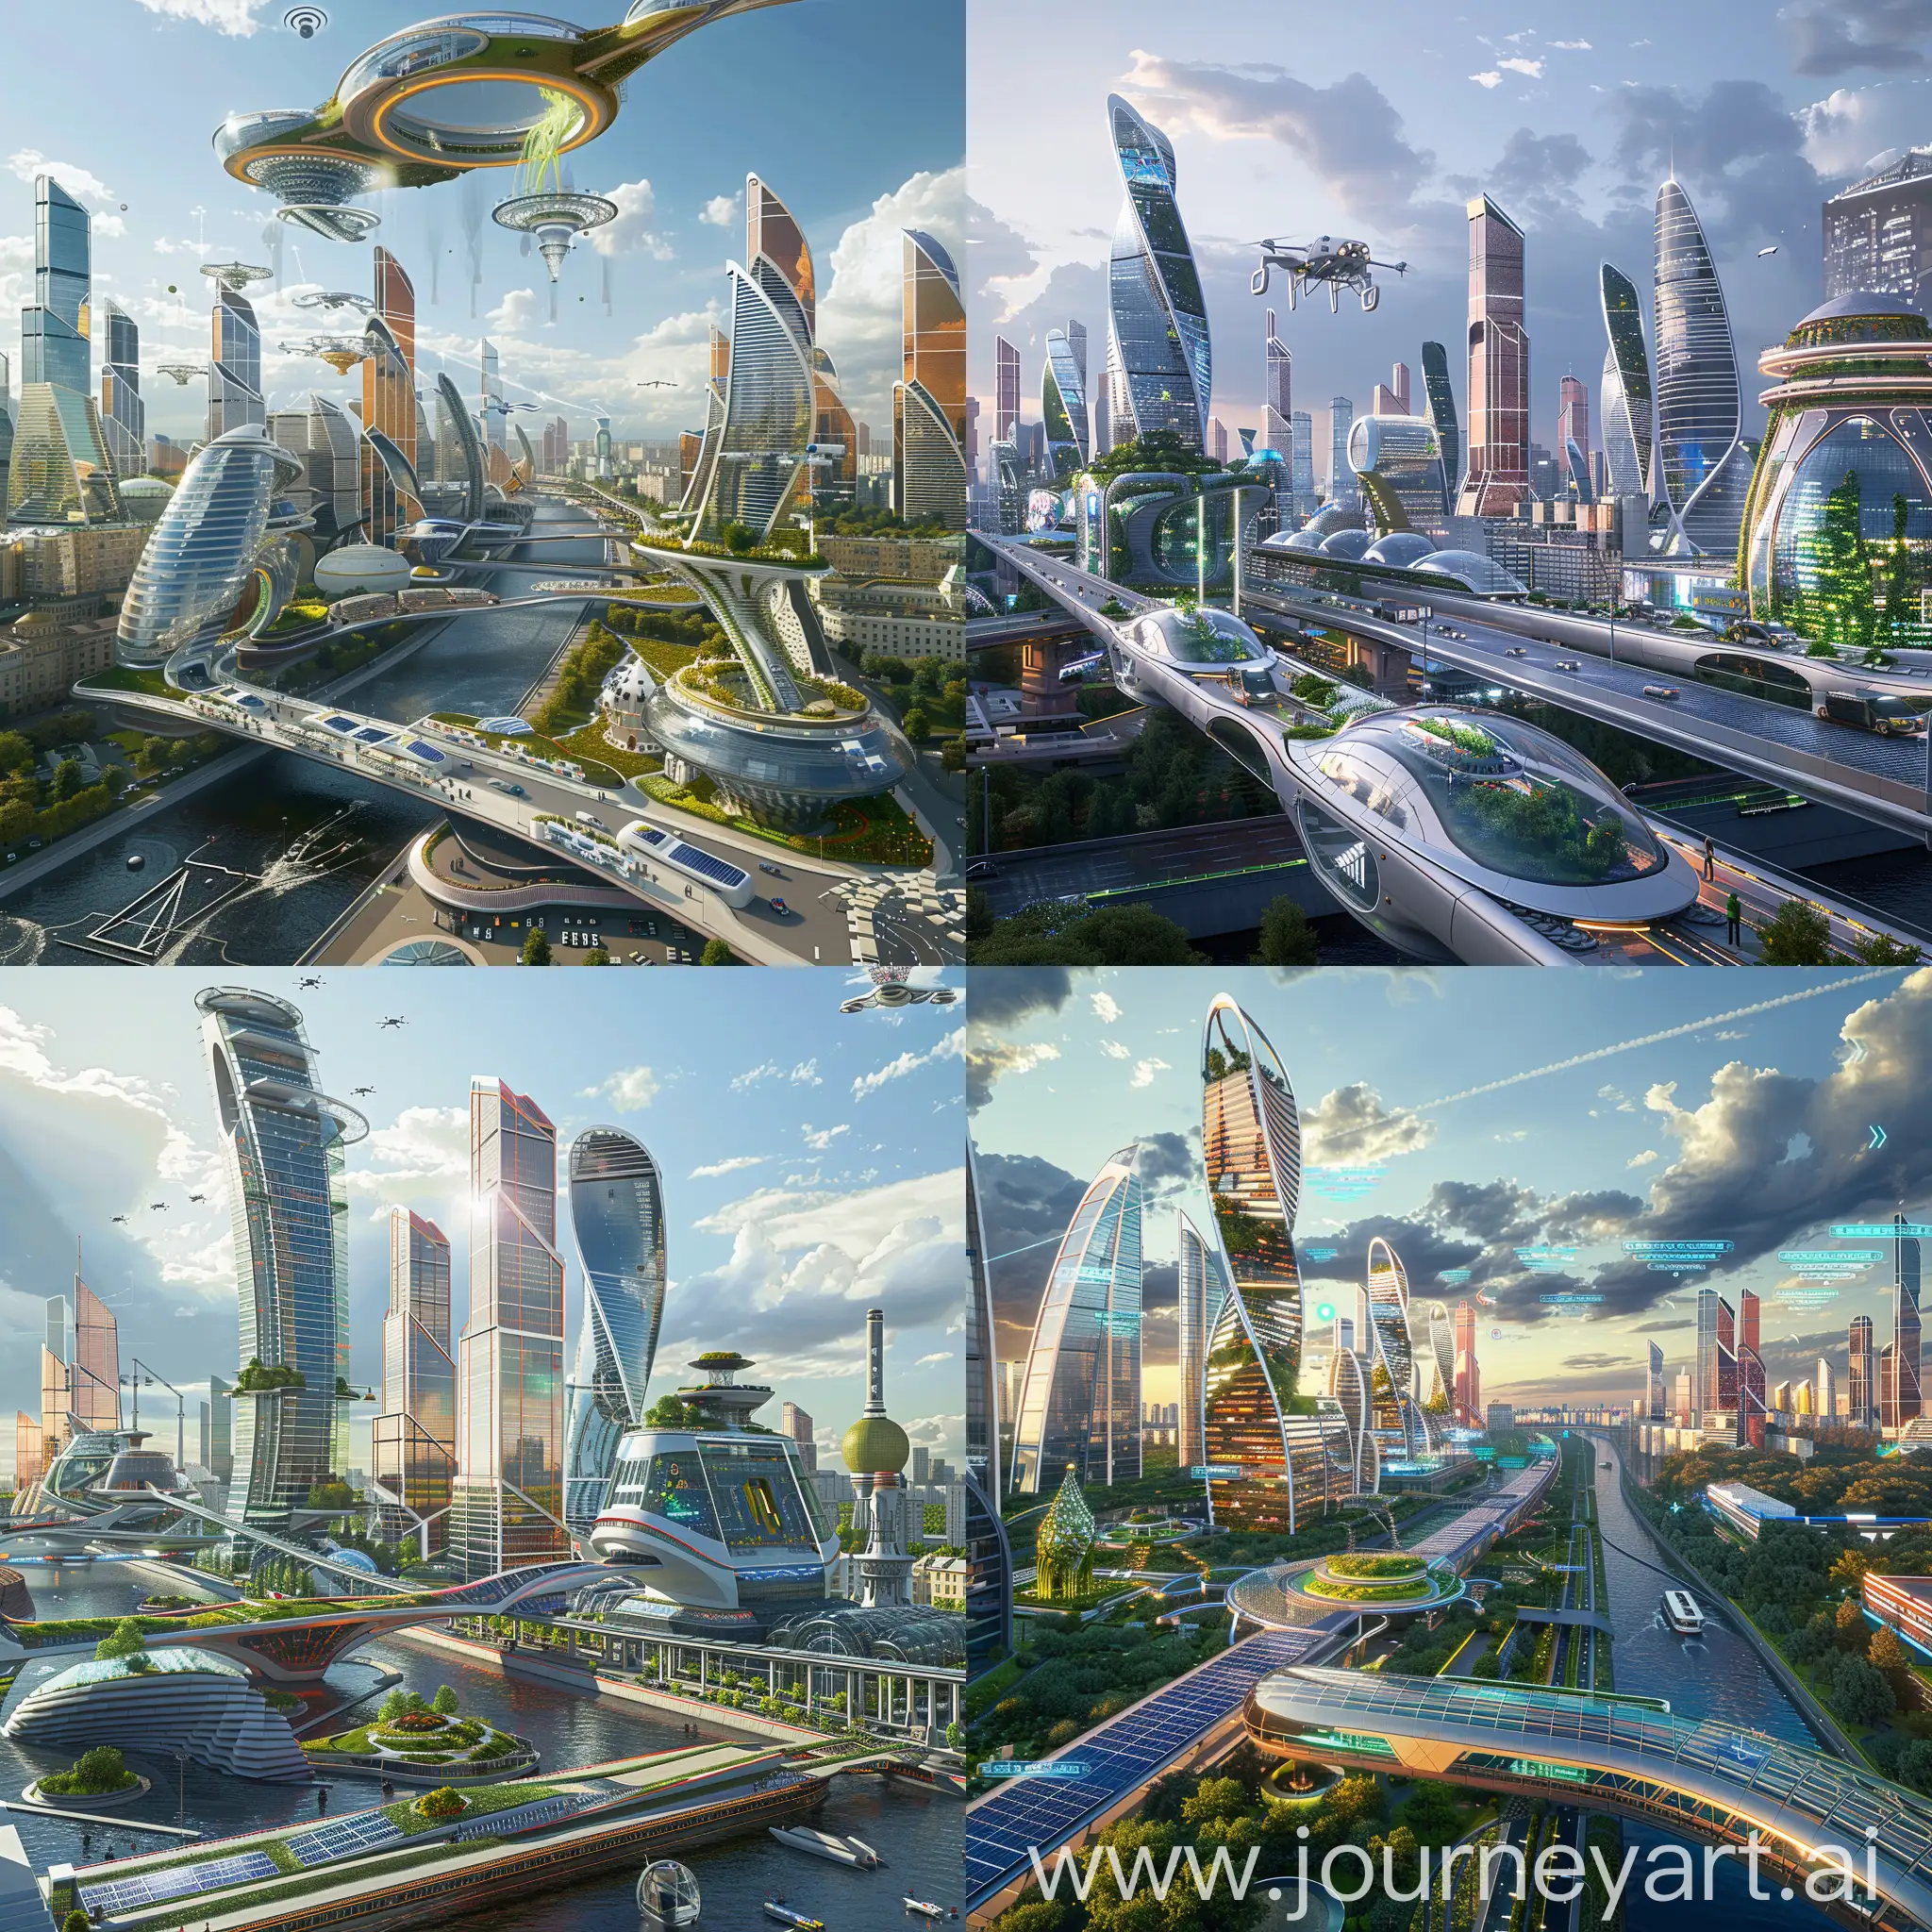 Futuristic-Moscow-Smart-Grids-Hyperloop-Transit-and-AR-Landmarks